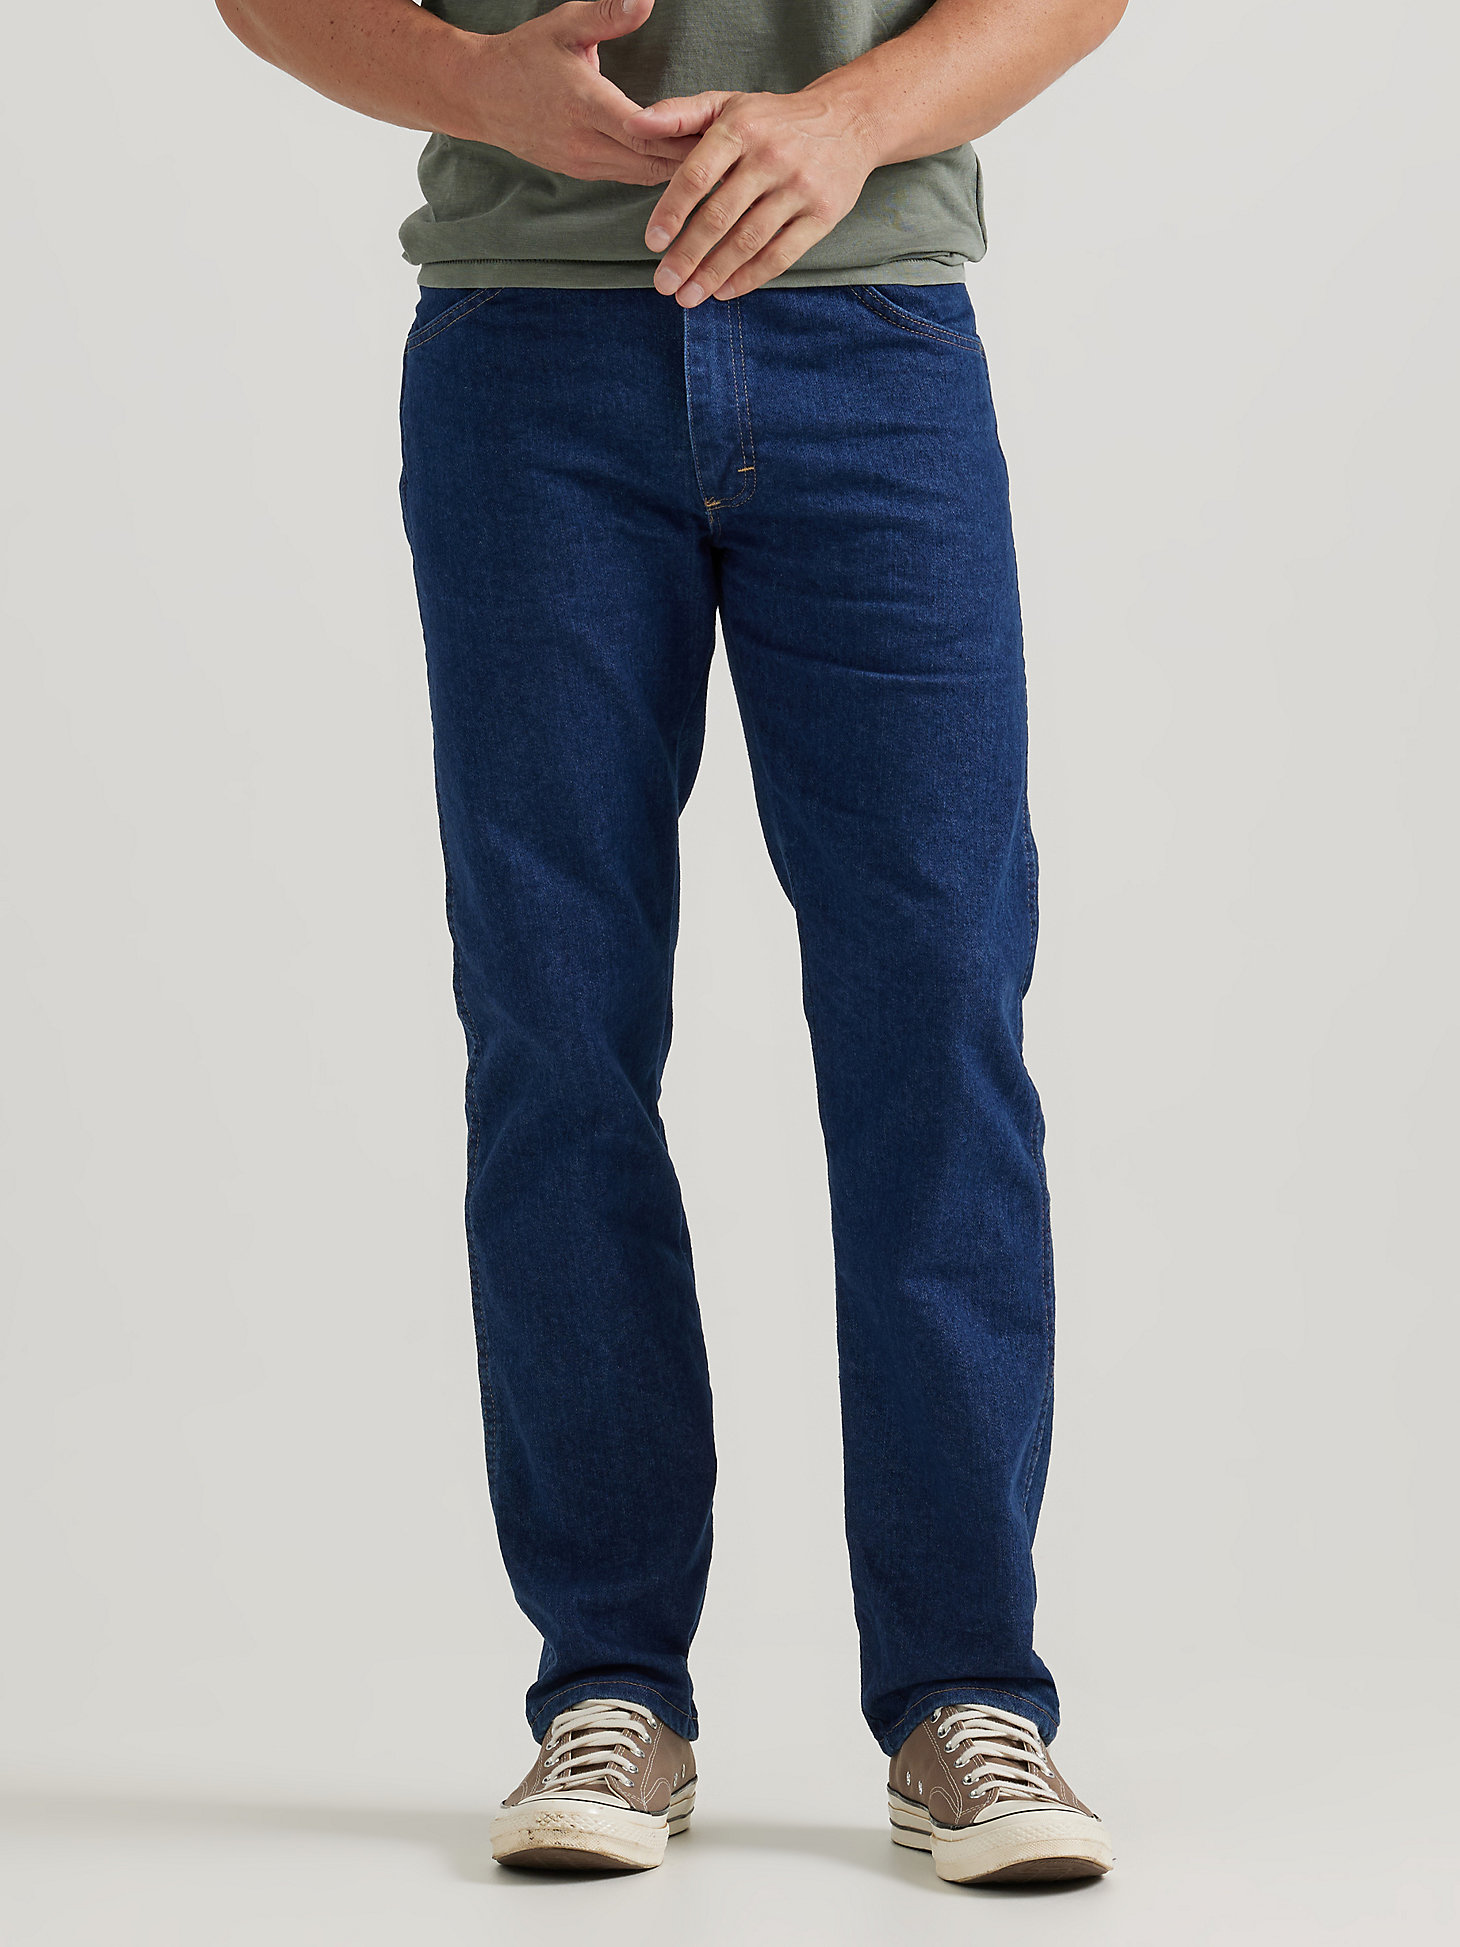 Outlook hiërarchie Stal Wrangler® Men's Five Star Premium Midweight Stretch Jean